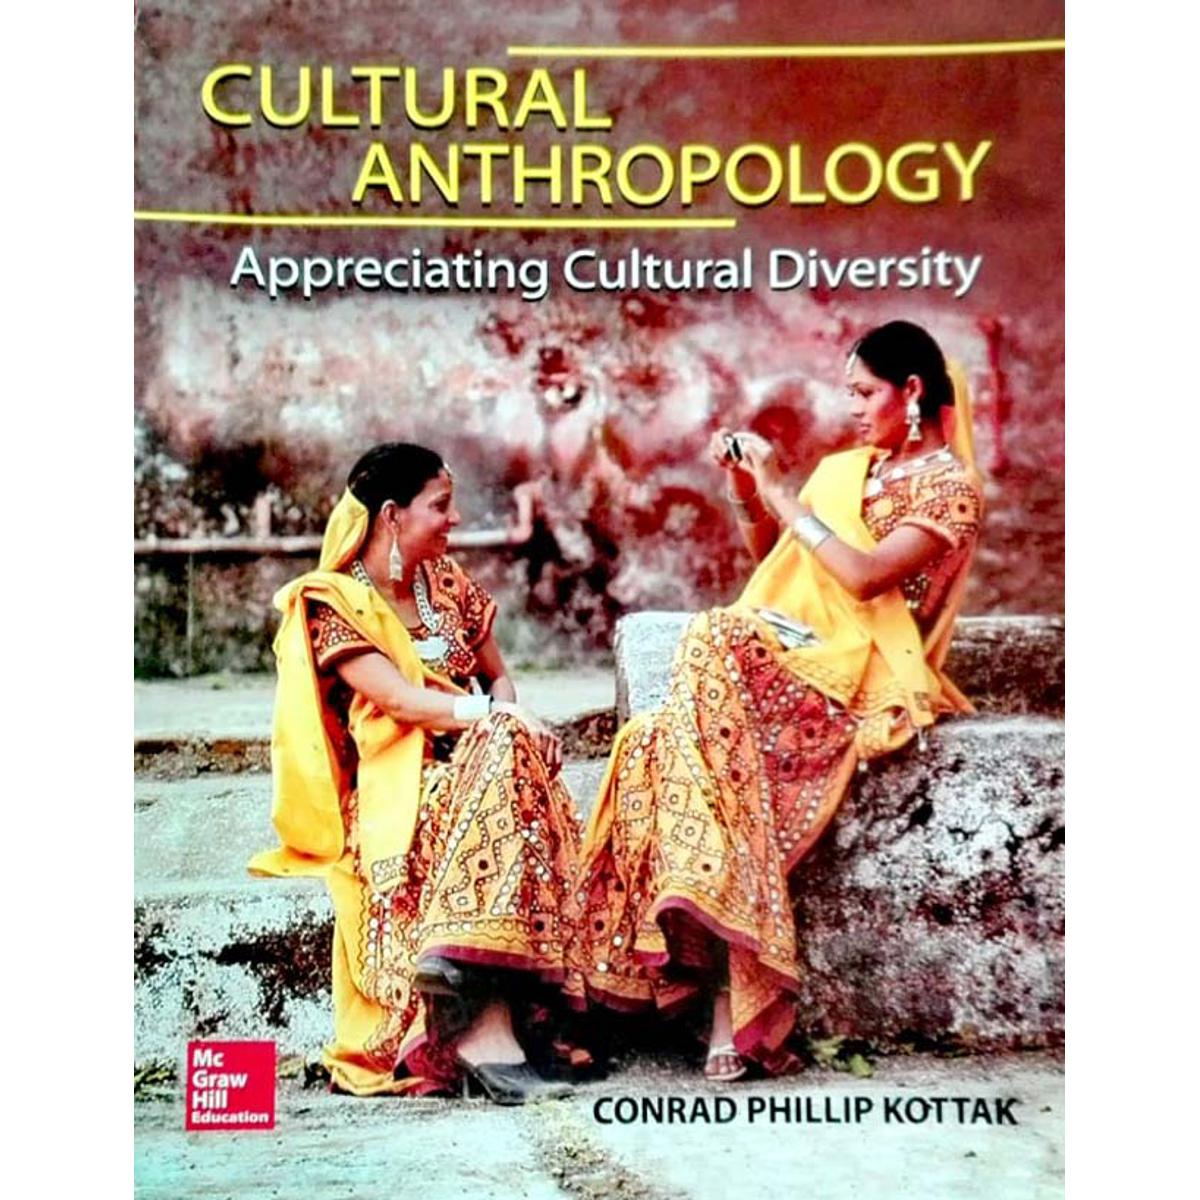 Cultural Anthropology (Conrad Phillip Kottak)